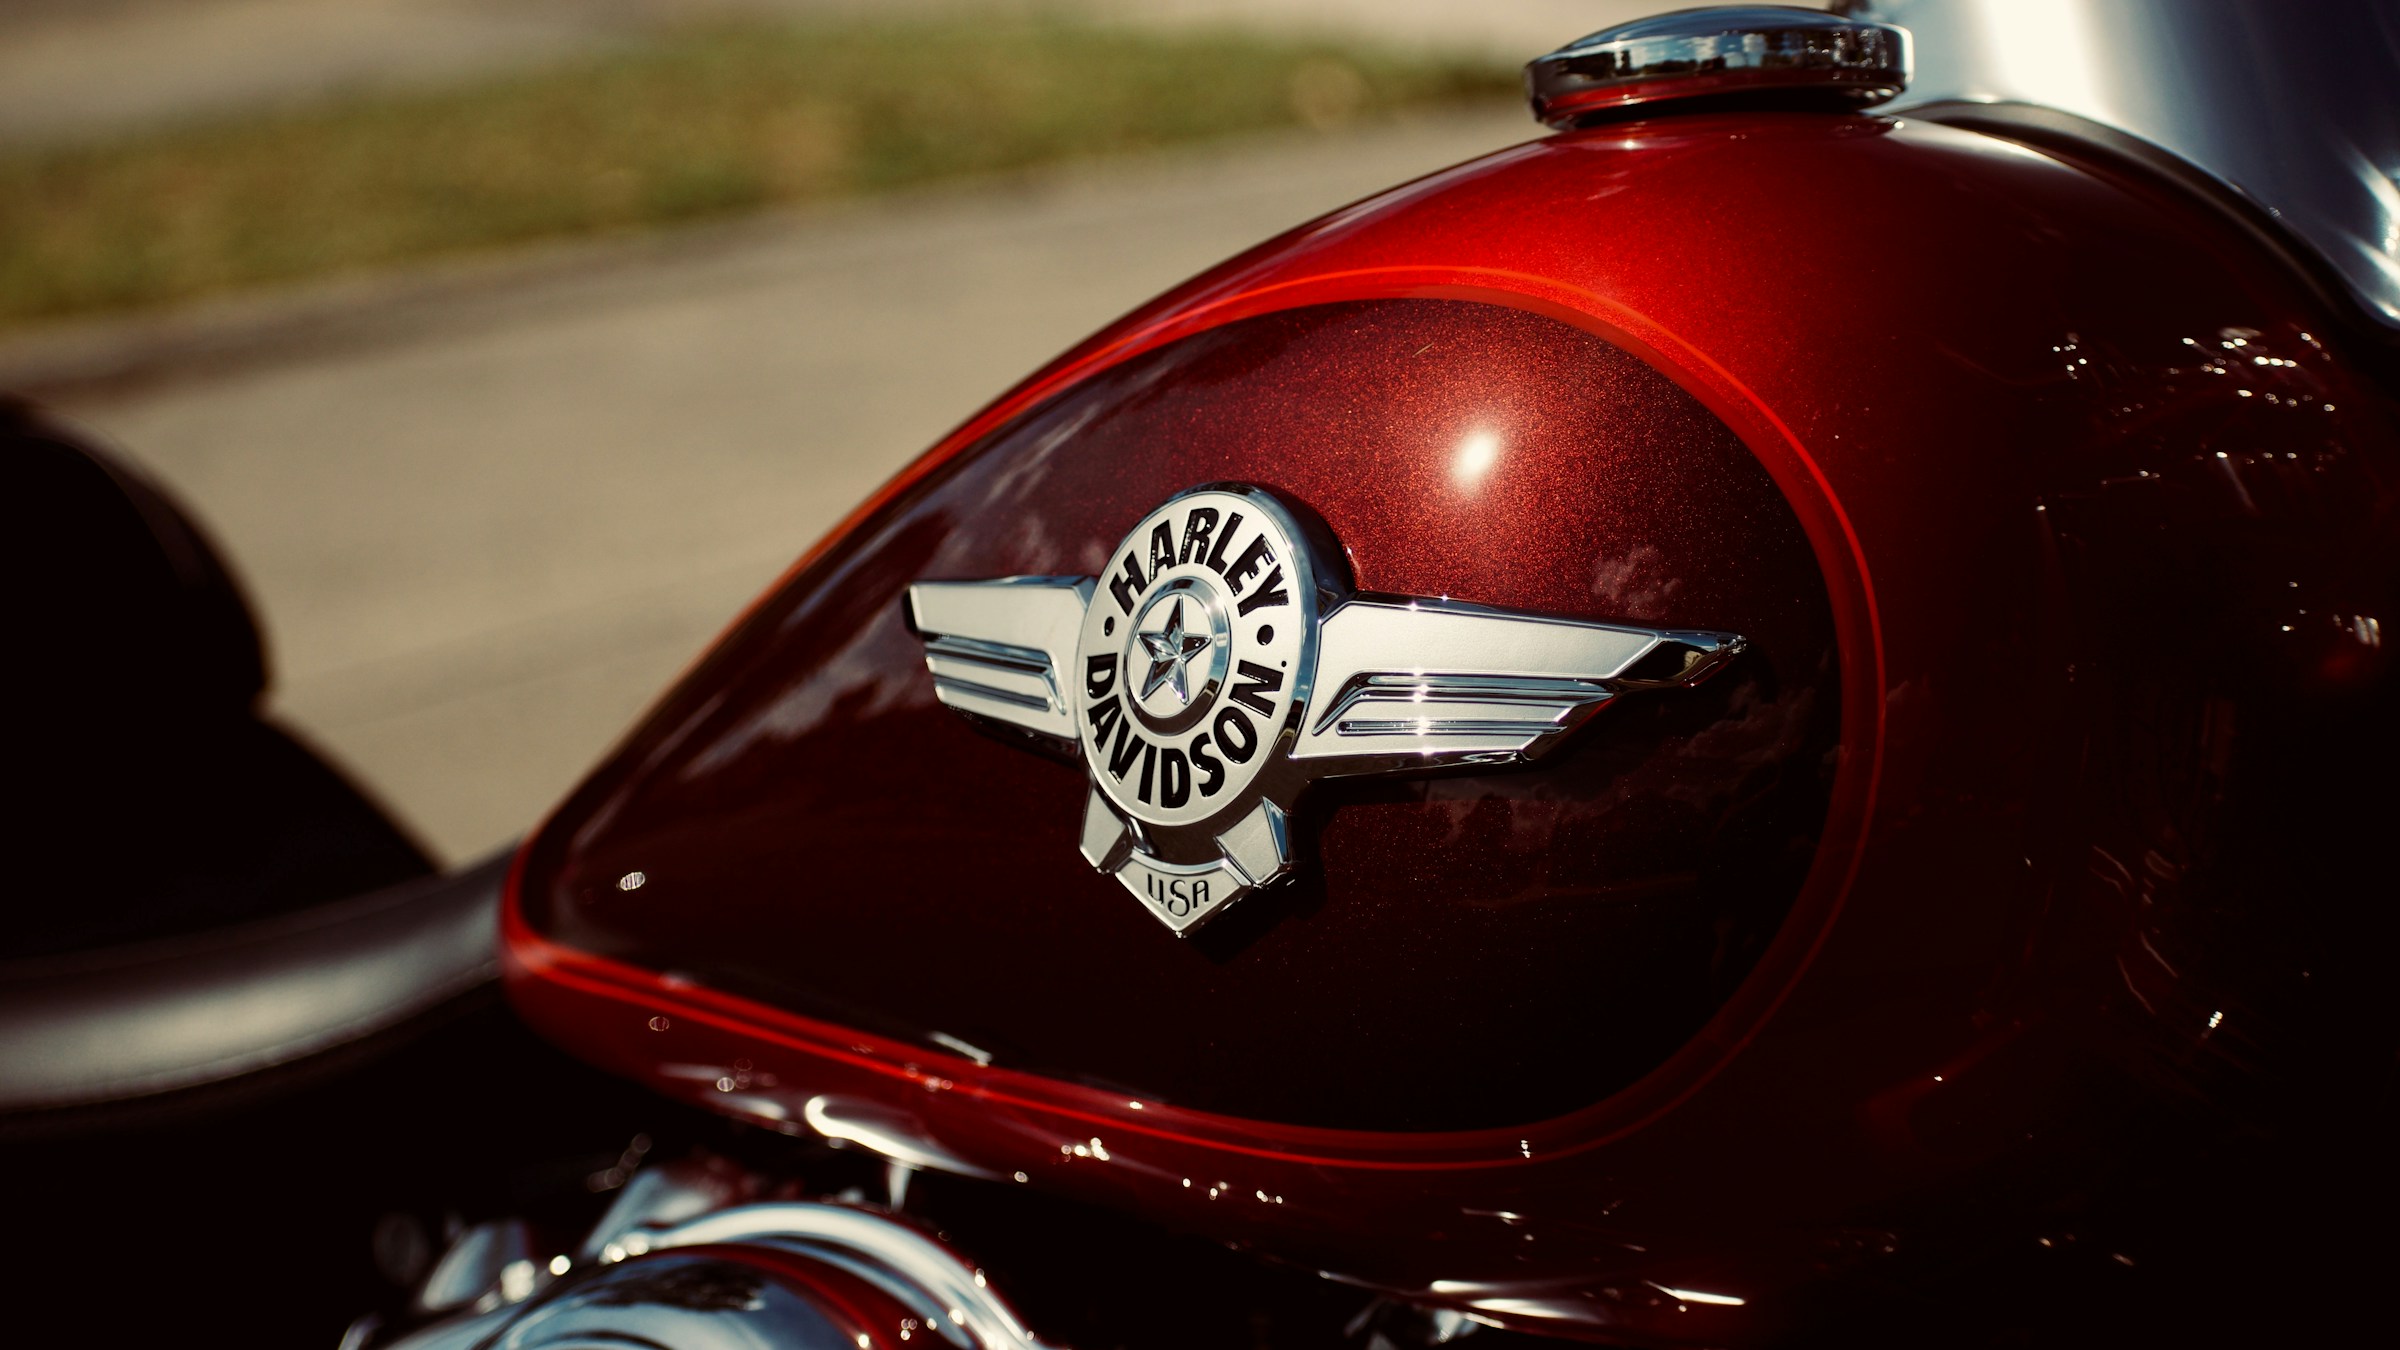 Harley-Davidson logo on a motorcycle’s fuel tank